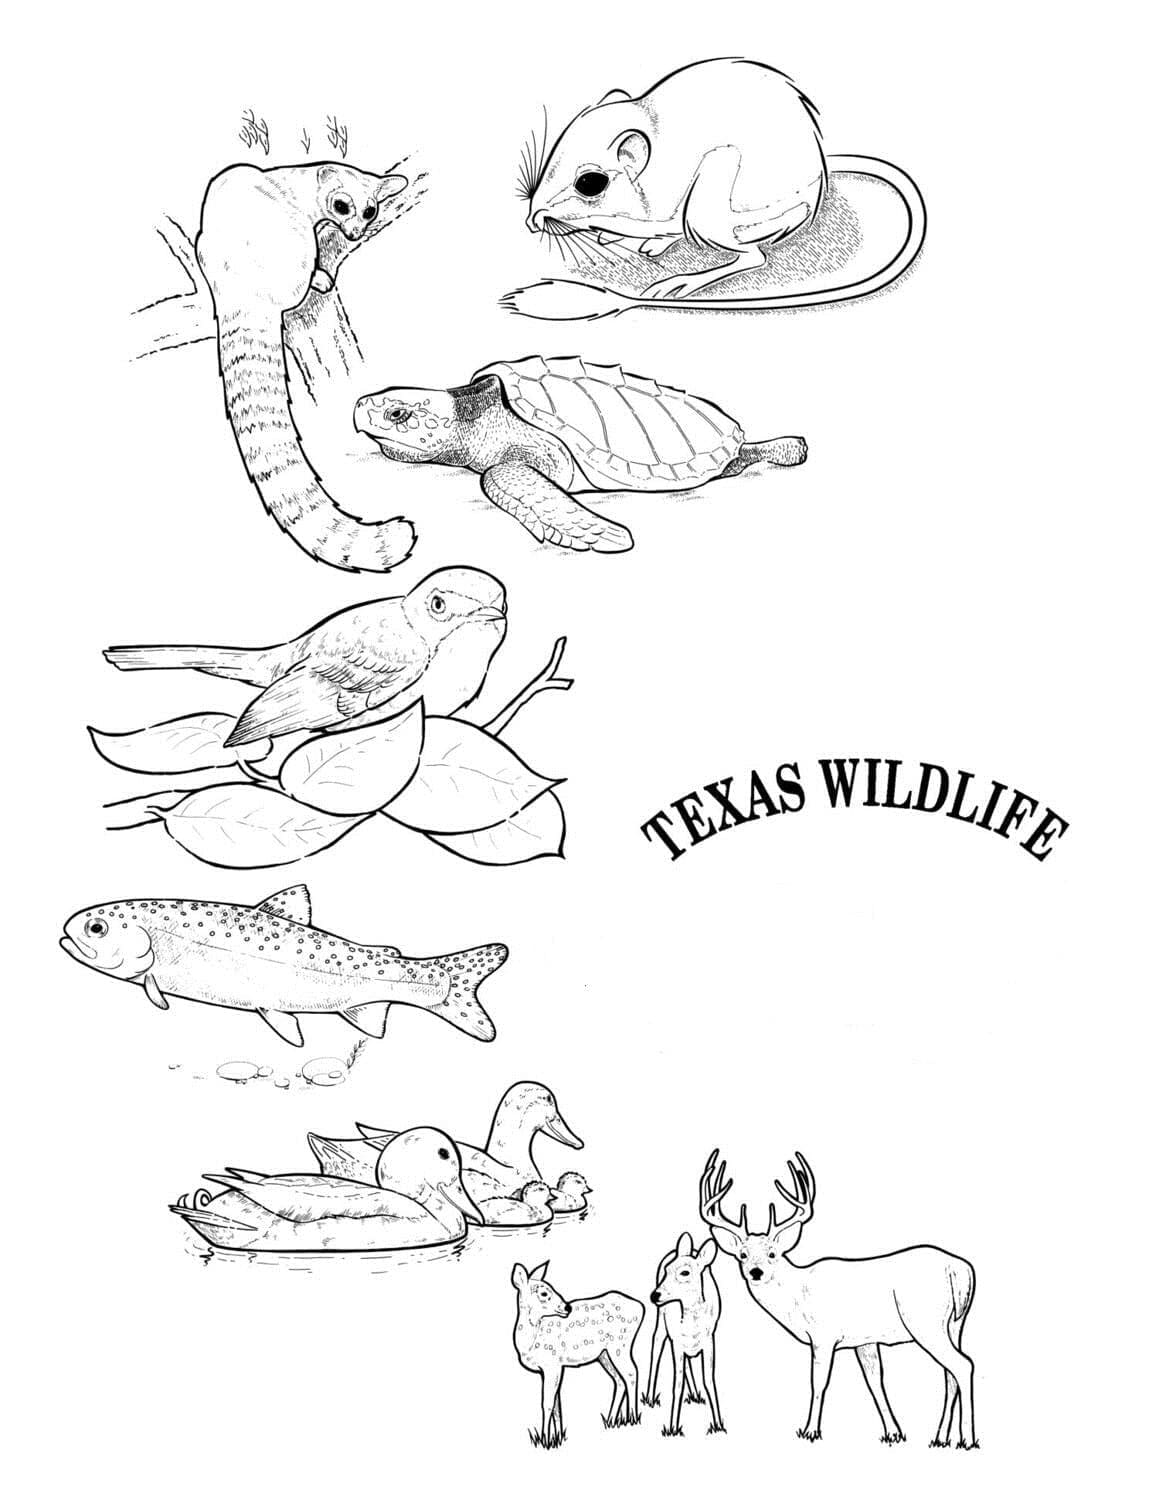 Texas wildlife coloring page